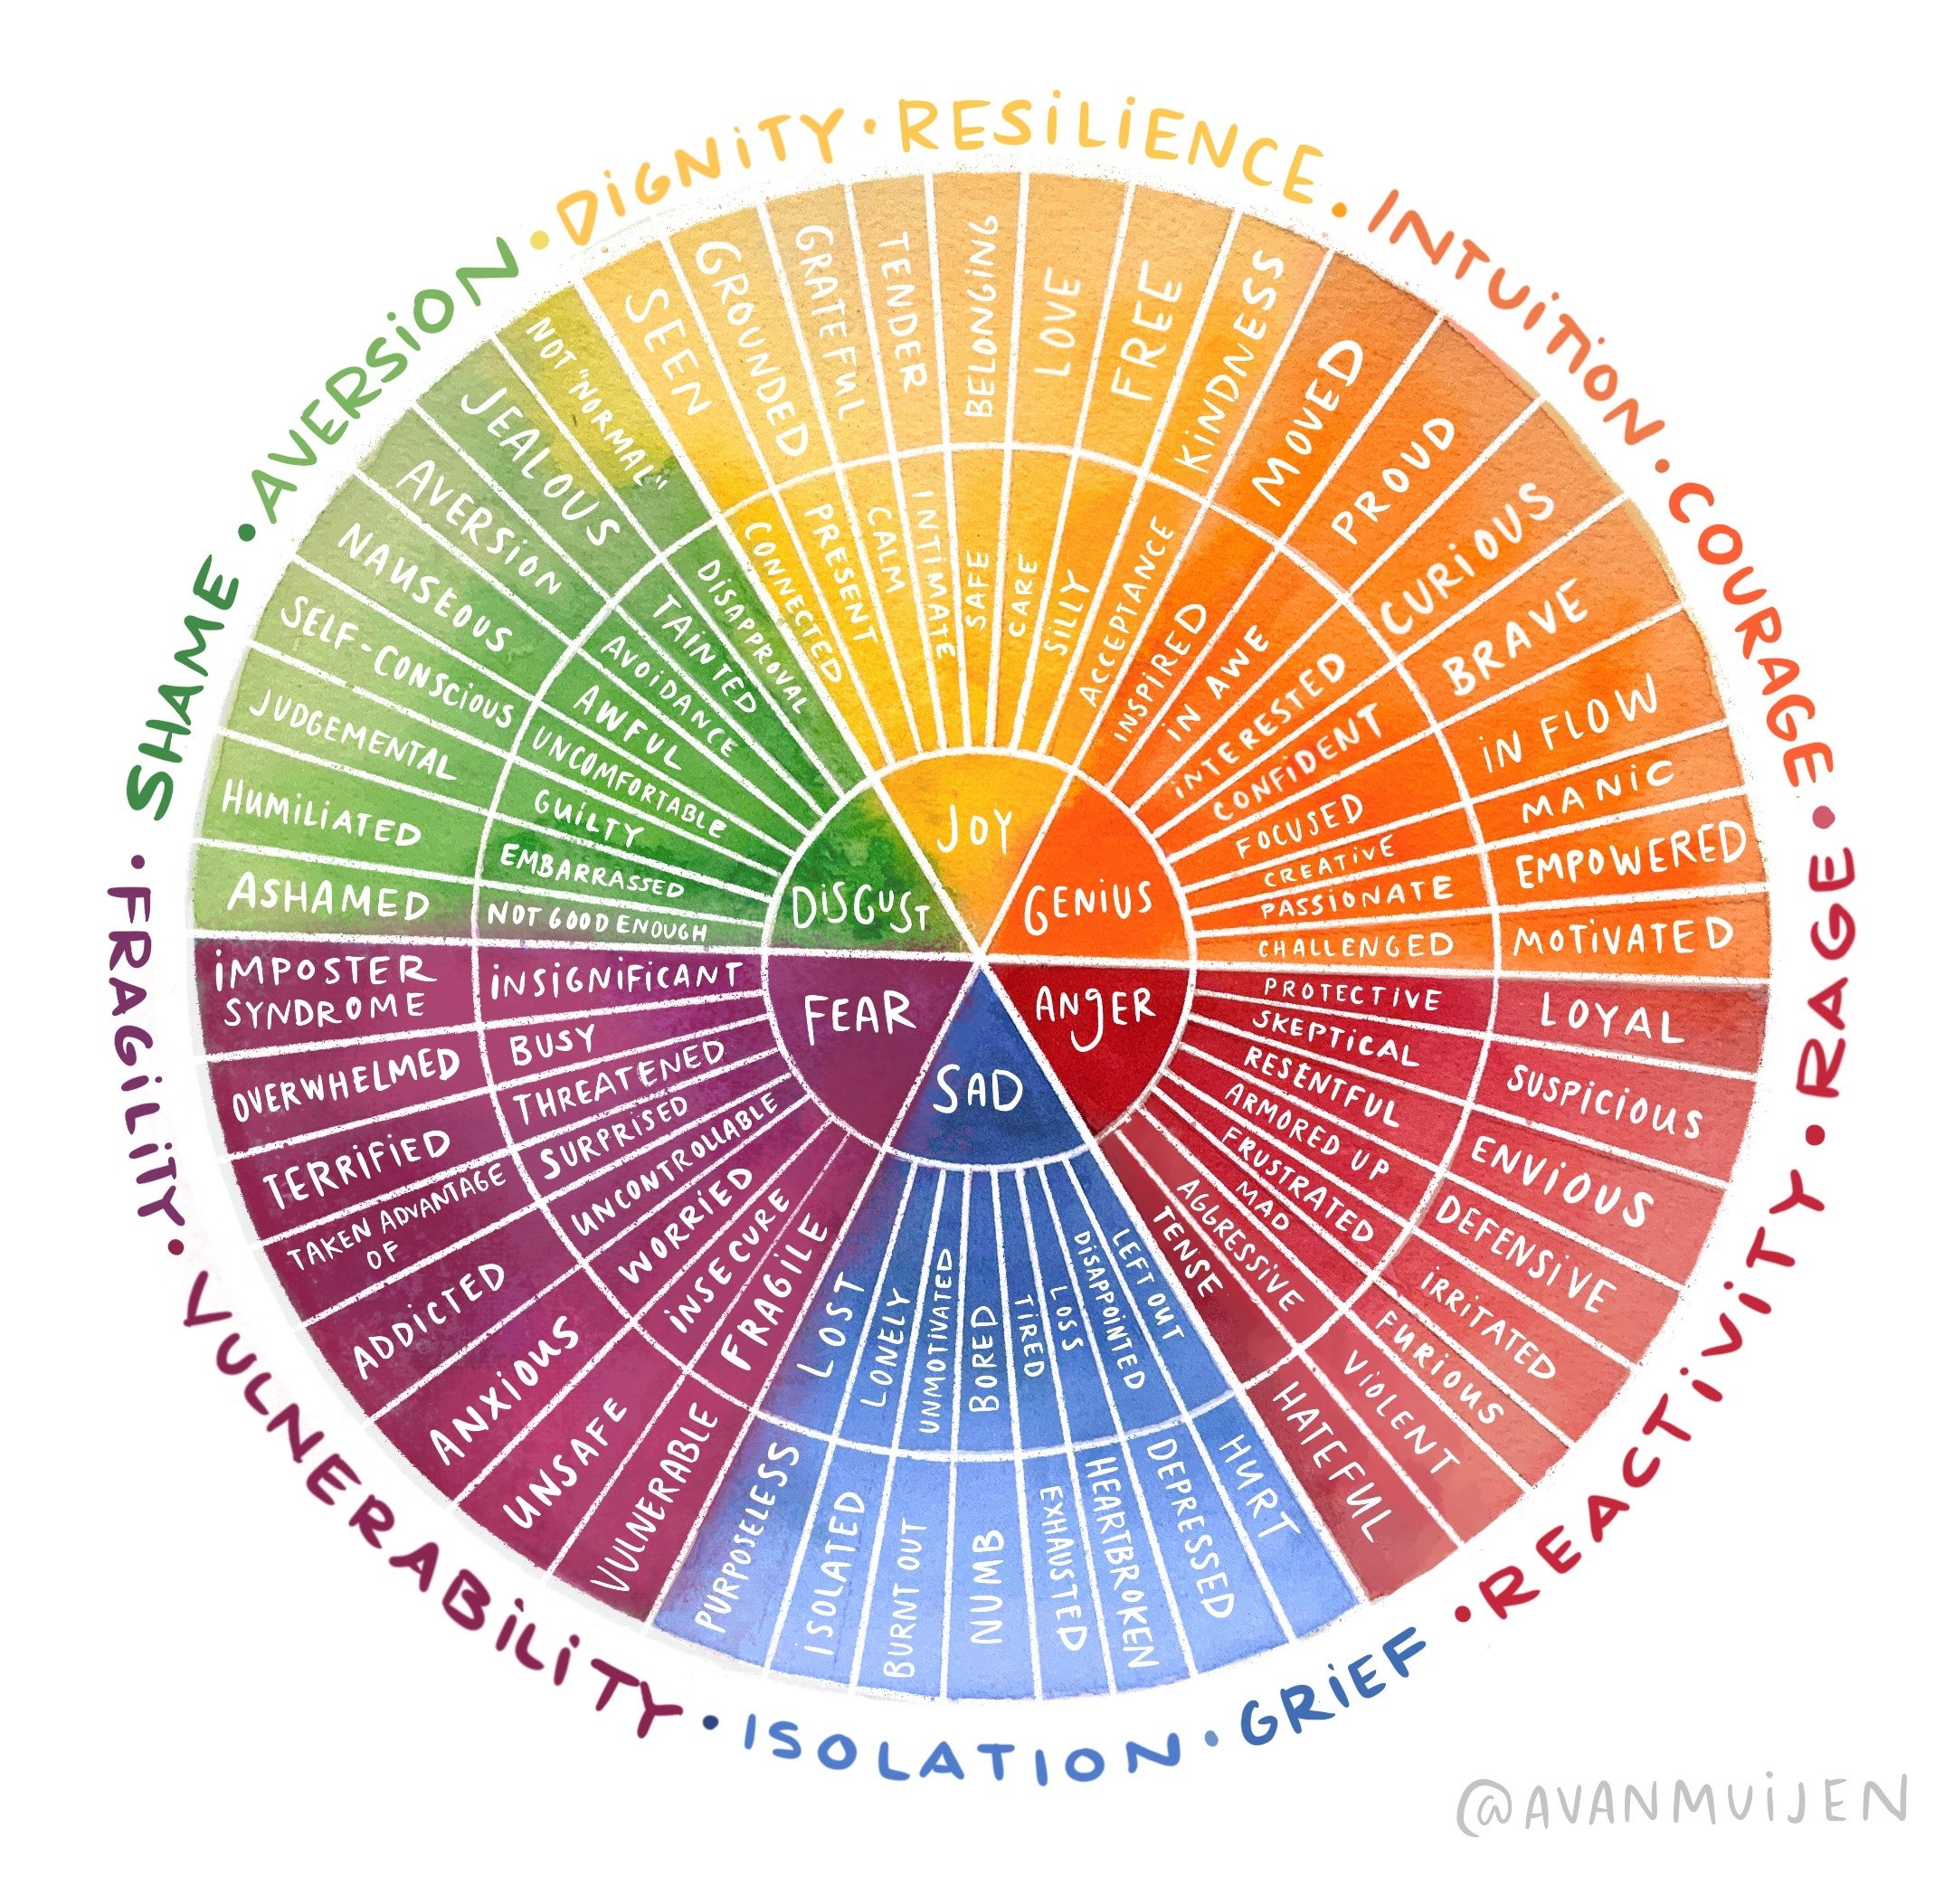 Emotion wheel of the range of emotions